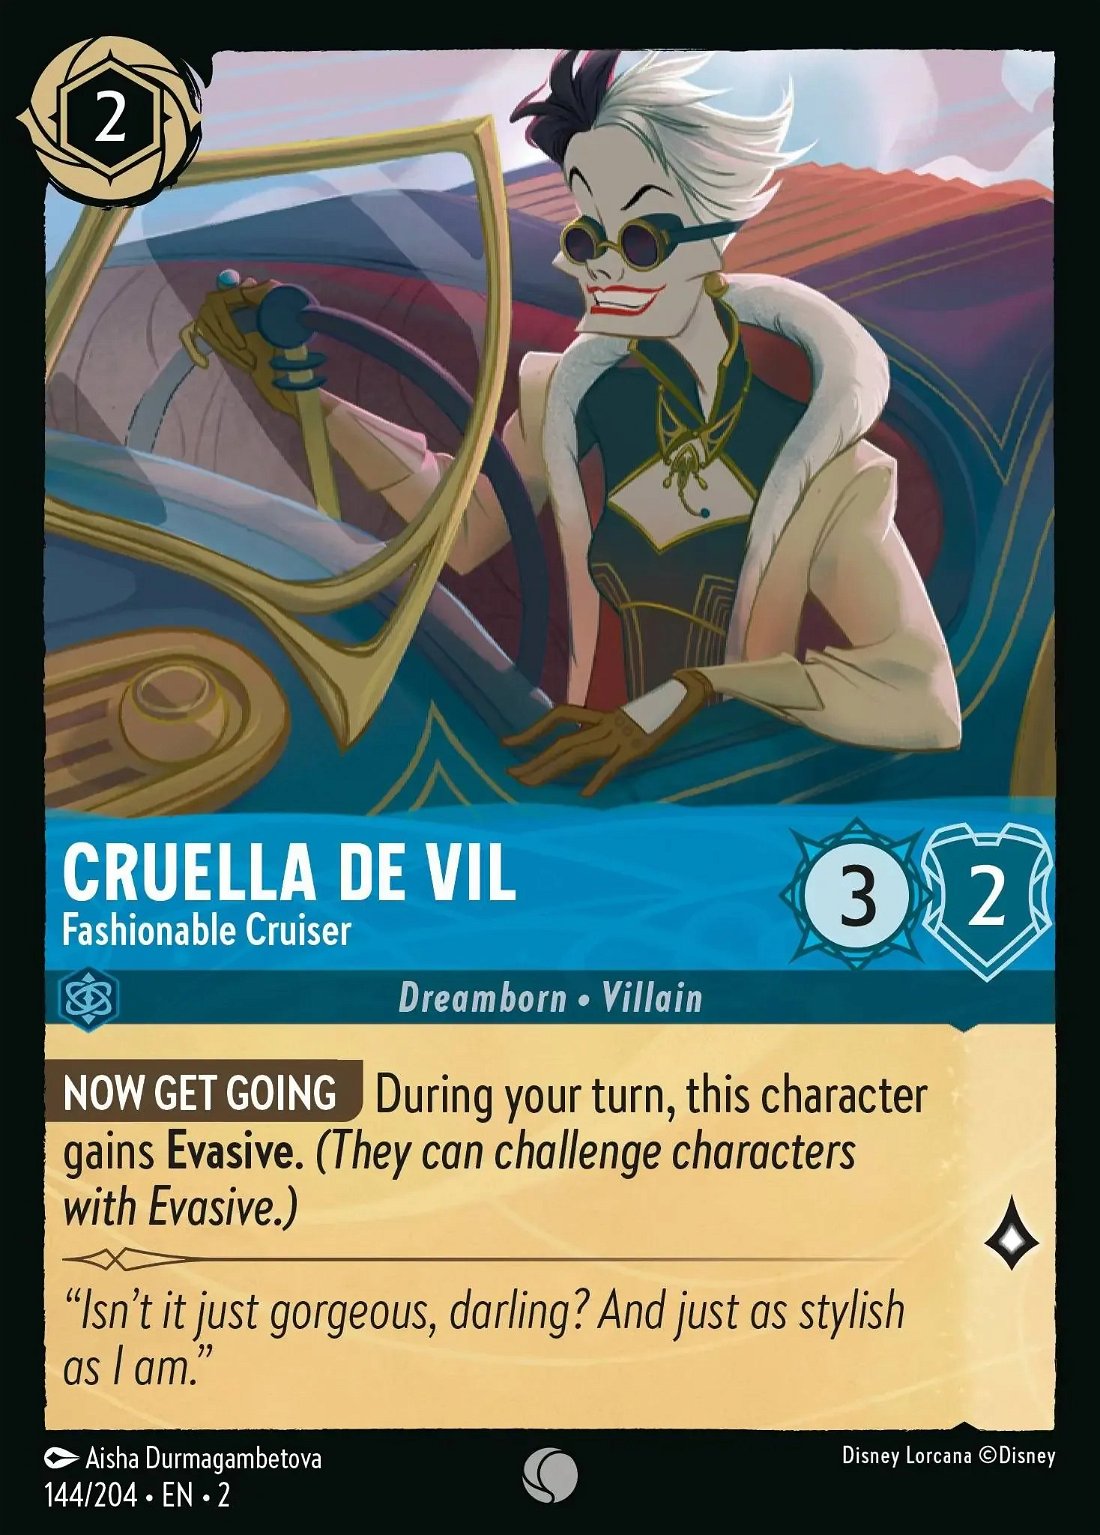 Cruella De Vil - Fashionable Cruiser Crop image Wallpaper